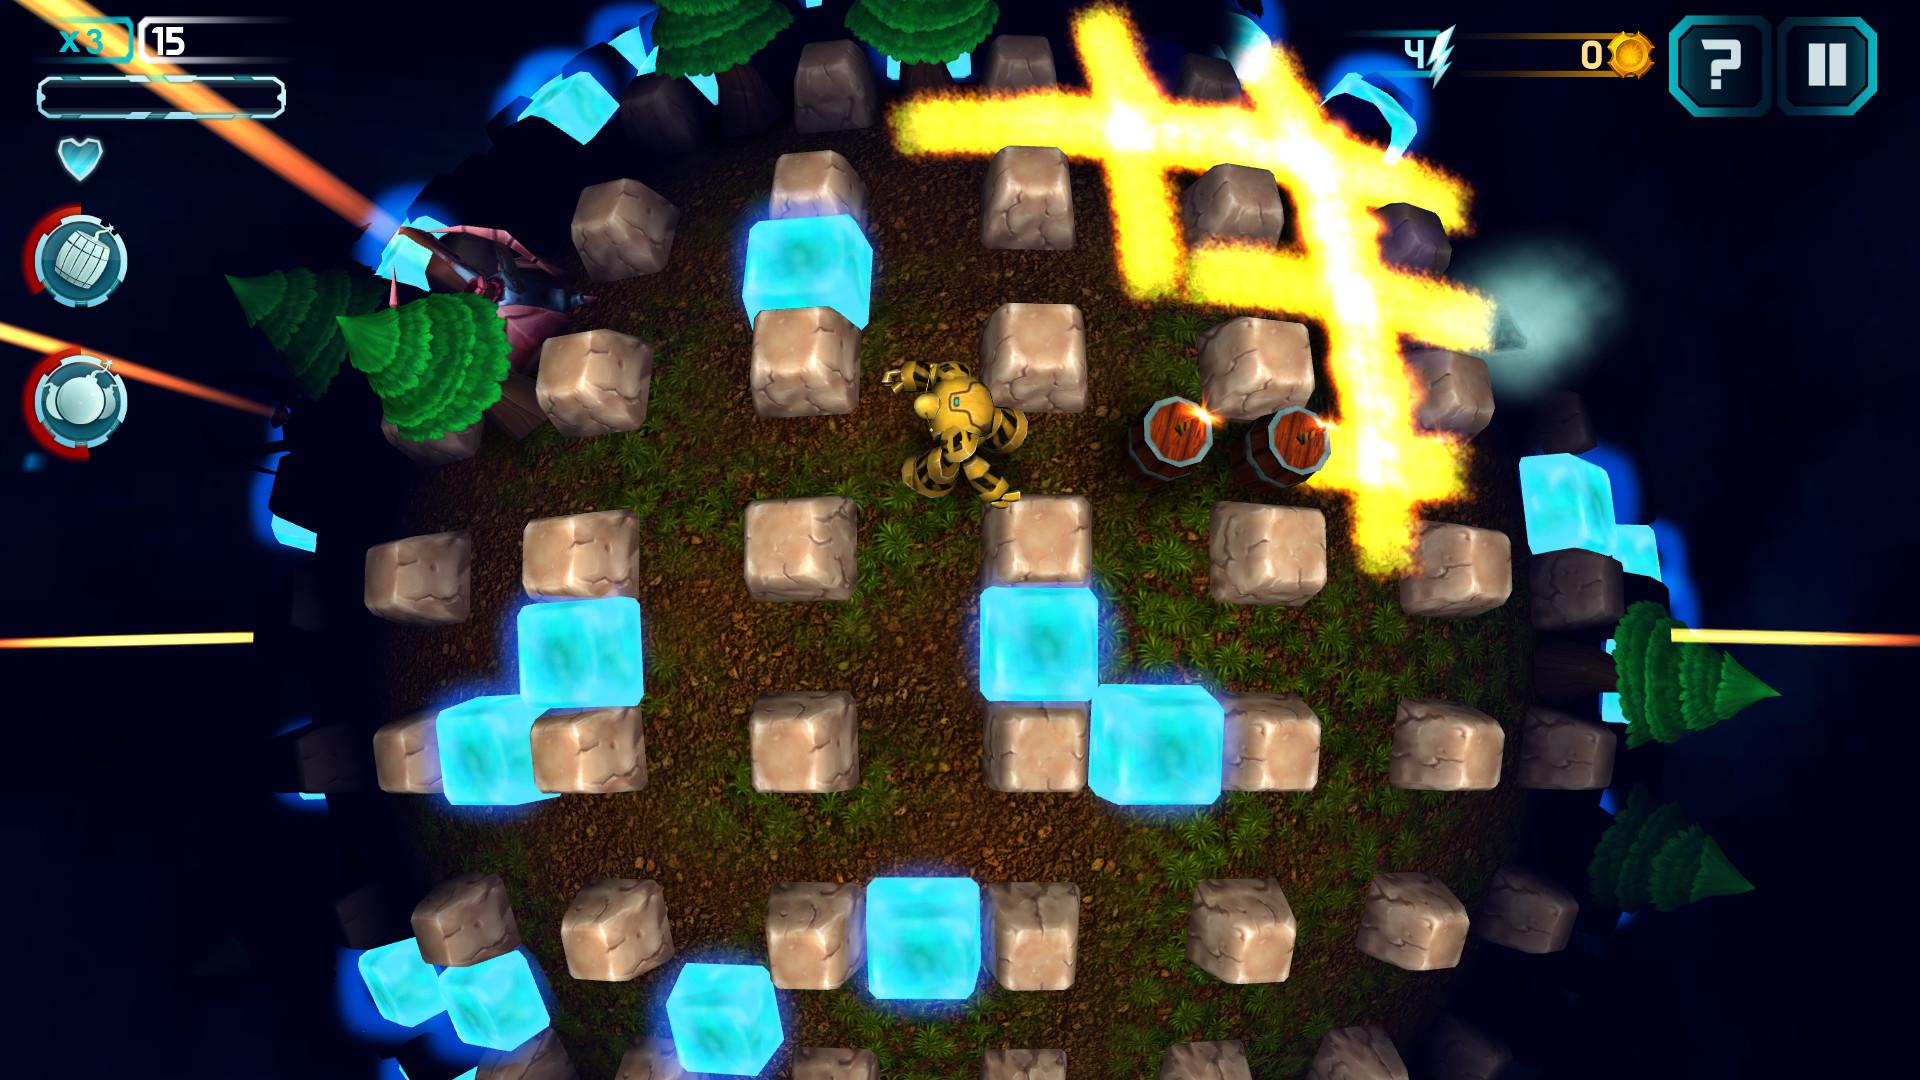 Screenshot №6 from game BomberZone